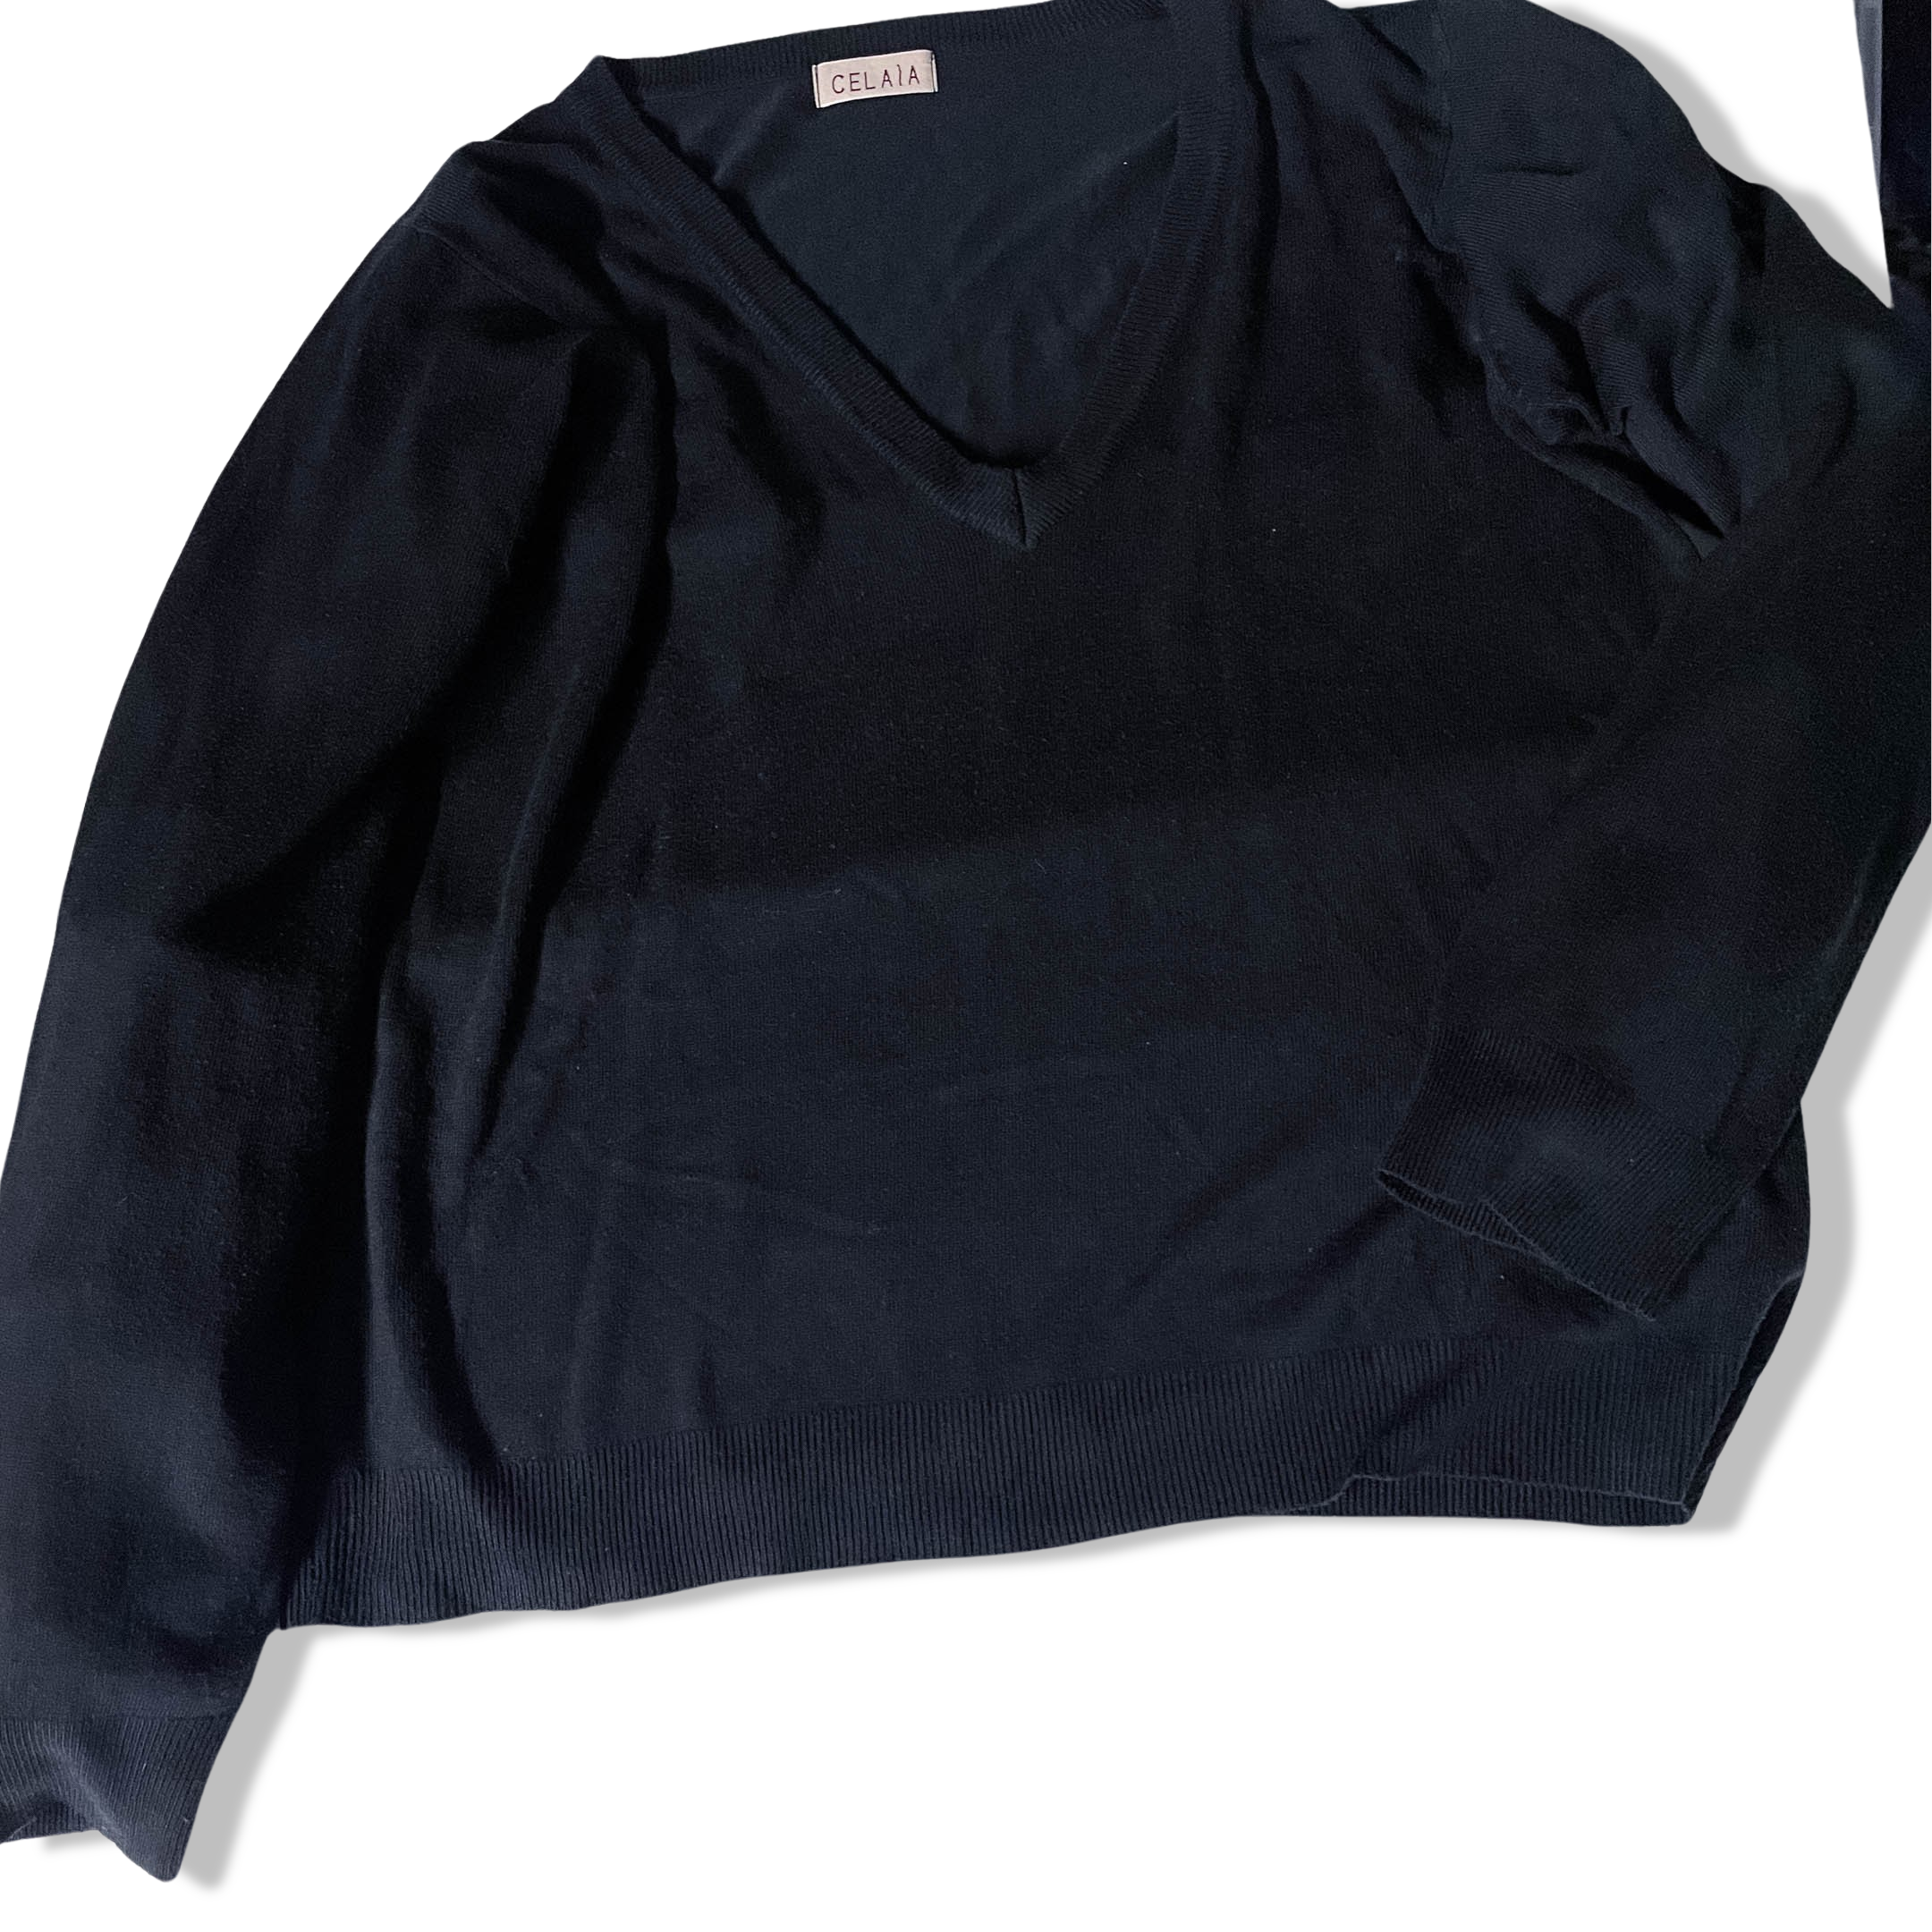 Vintage Celaia Black V-neck sweatshirt L/XL